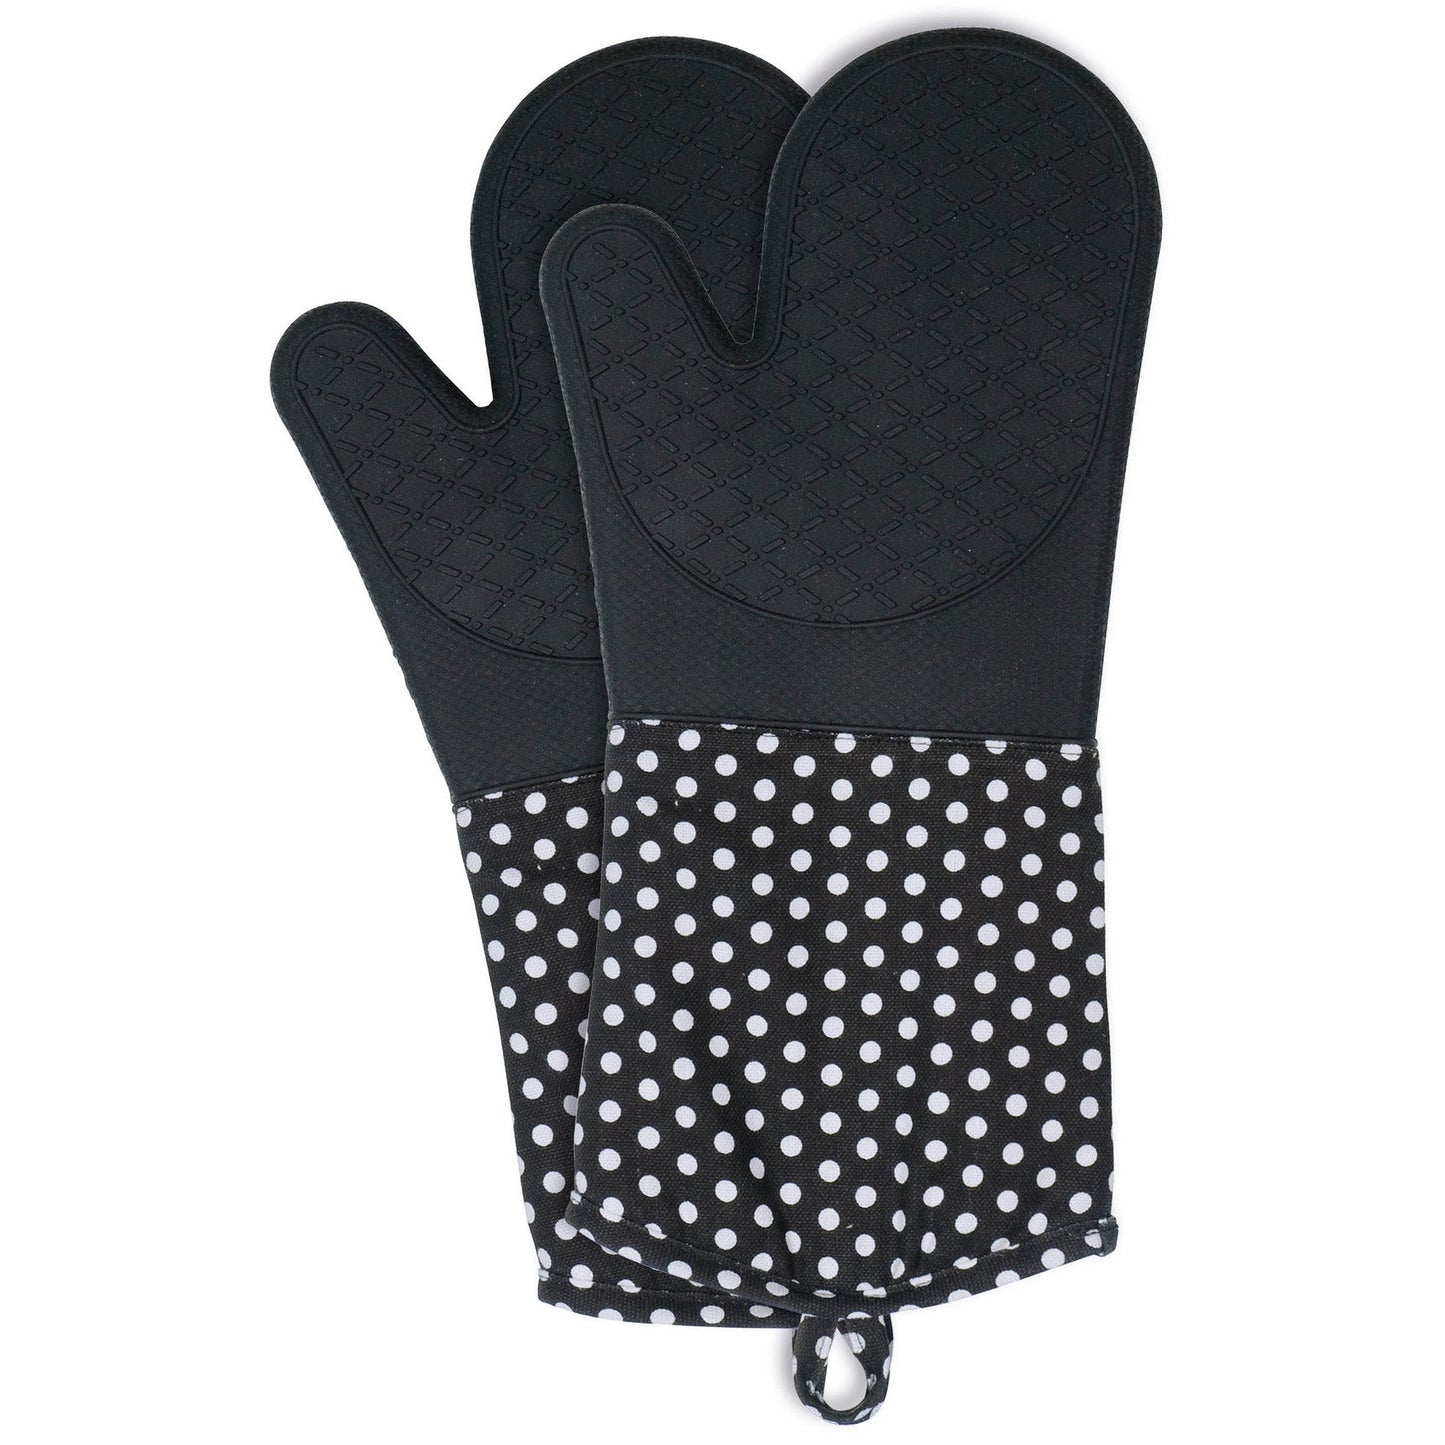 Oven Gloves Silicone 2 Pcs - Black W/ White Dots